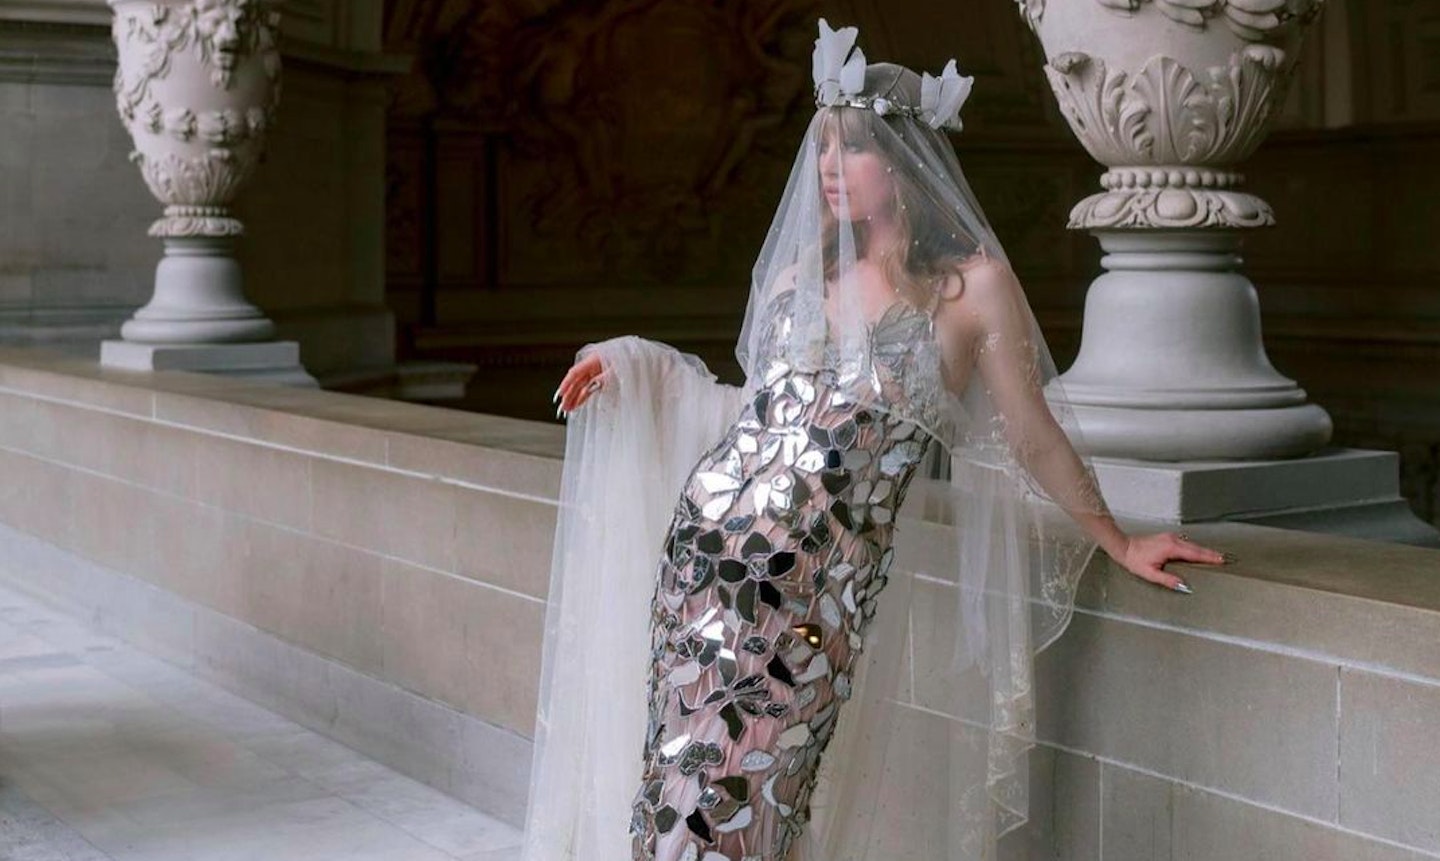 See Anya Taylor-Joy's stunning, unconventional wedding dress